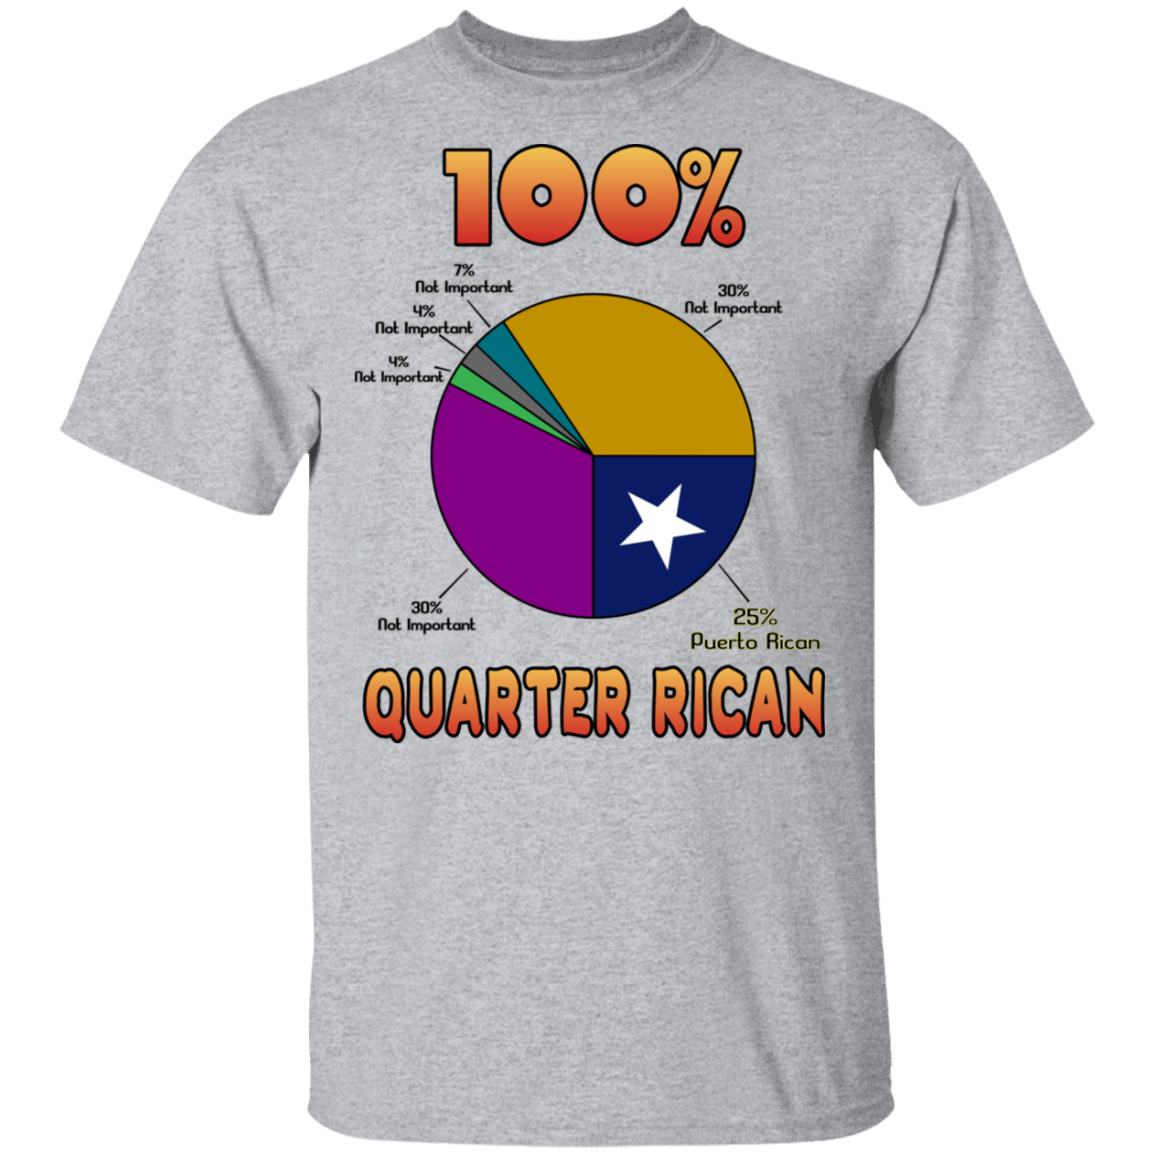 QUARTER RICAN 5.3 oz. T-Shirt - Puerto Rican Pride